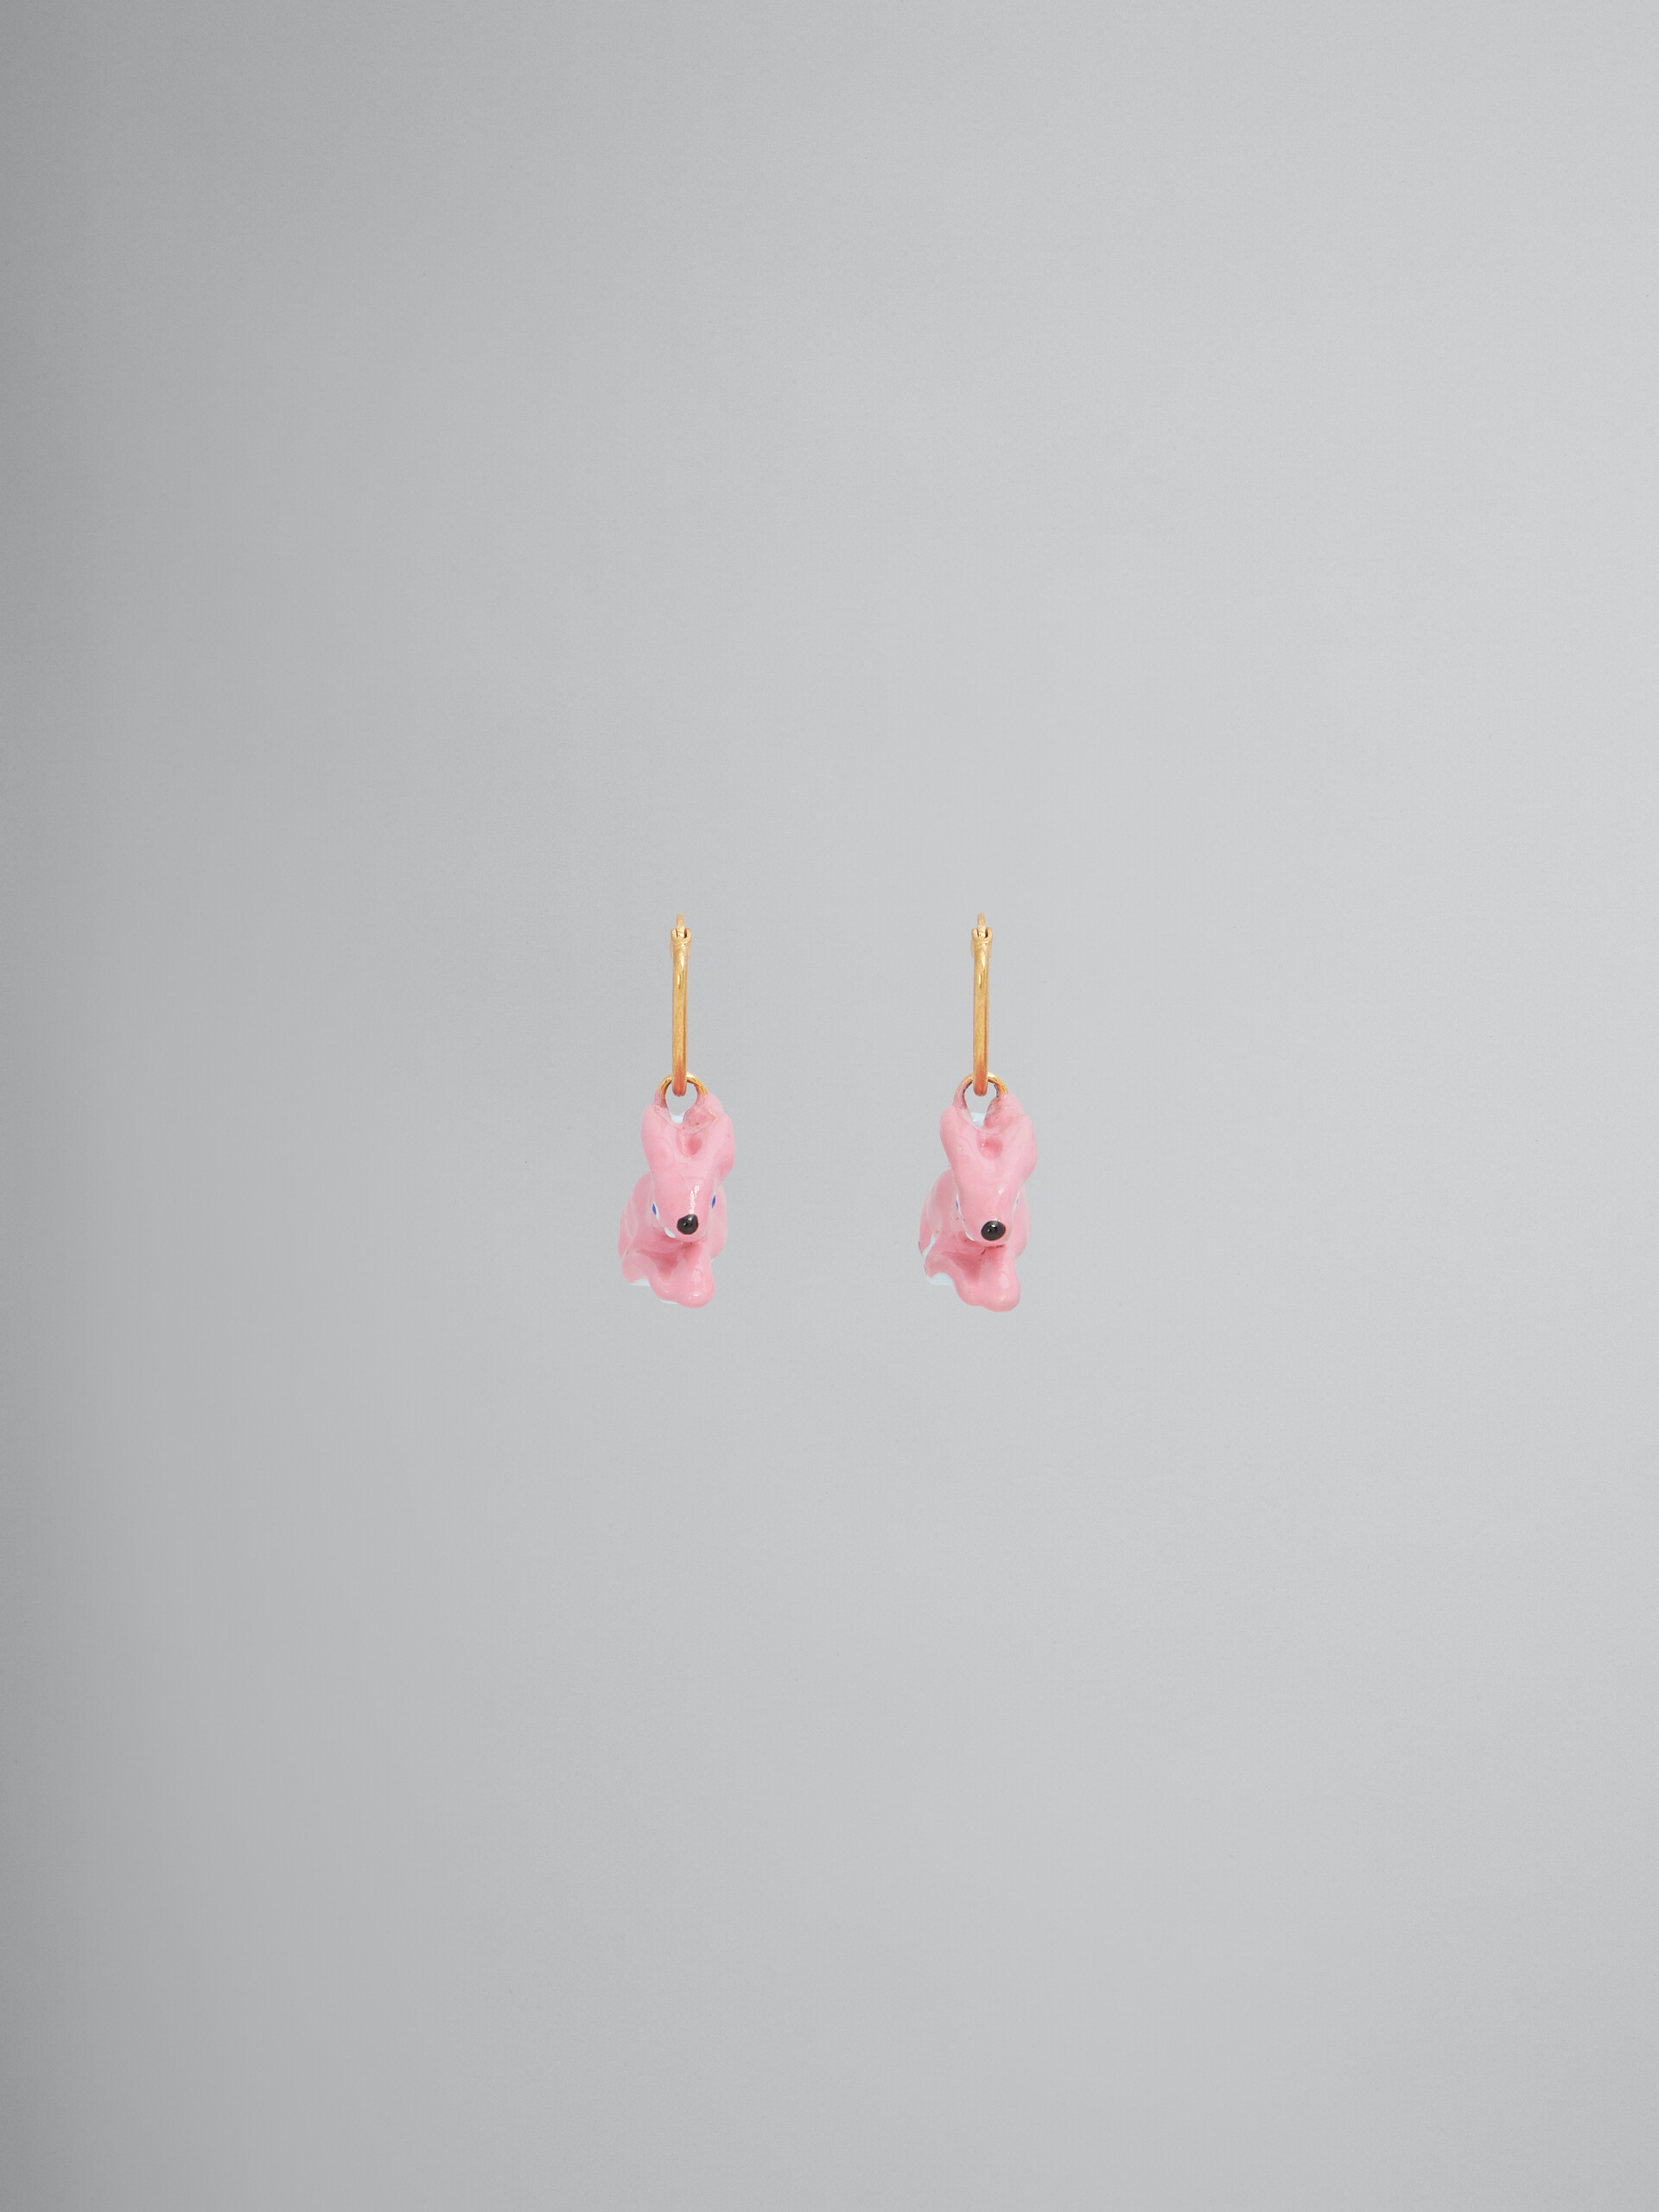 Earrings with rabbit pendant - Earrings - Image 1